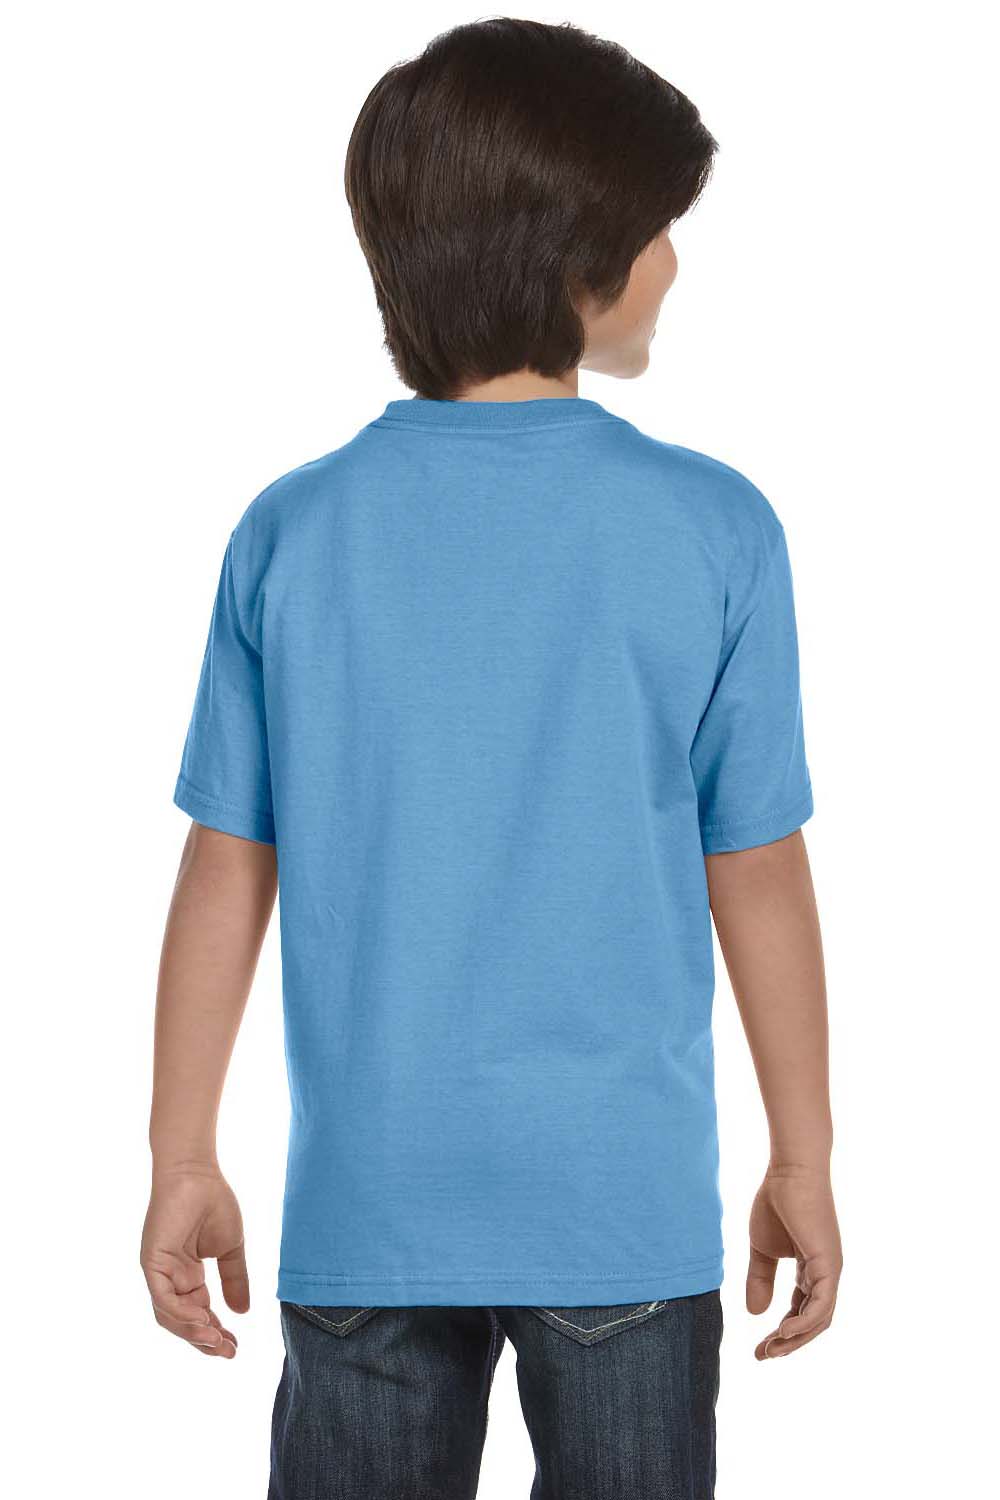 Gildan G800B Youth DryBlend Moisture Wicking Short Sleeve Crewneck T-Shirt Carolina Blue Back